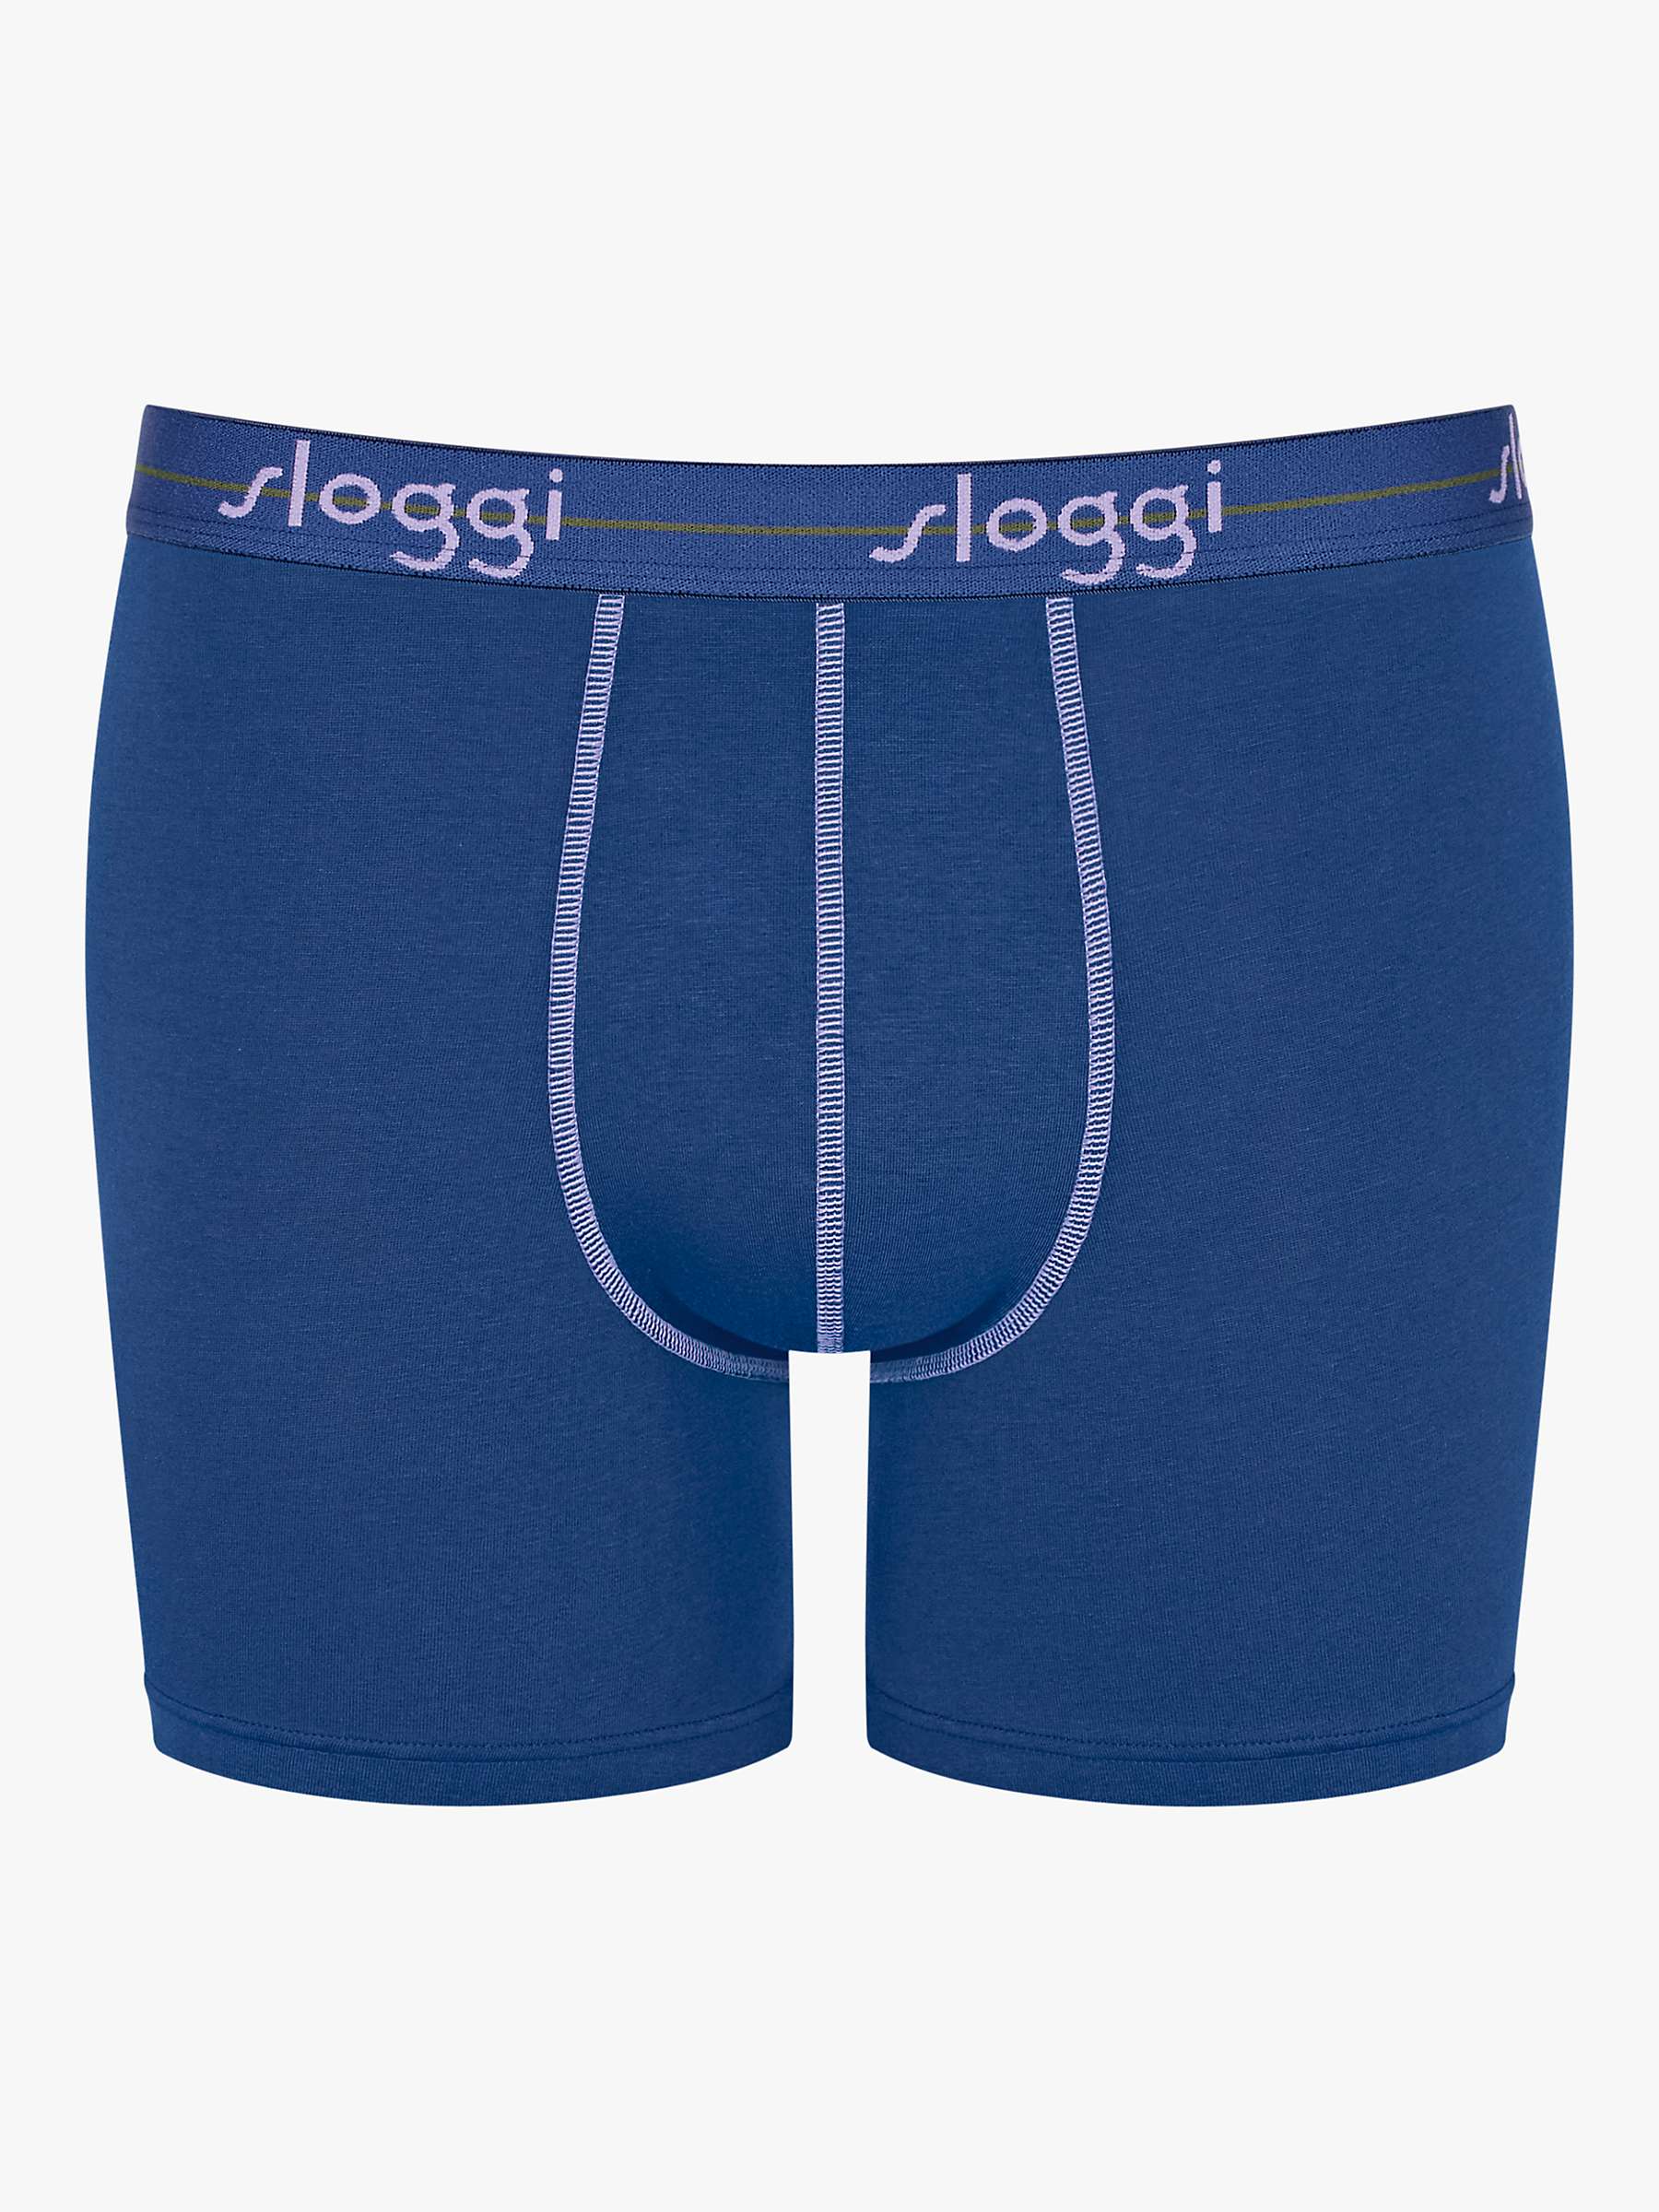 Buy sloggi Start Short Briefs, Pack of 2 Online at johnlewis.com